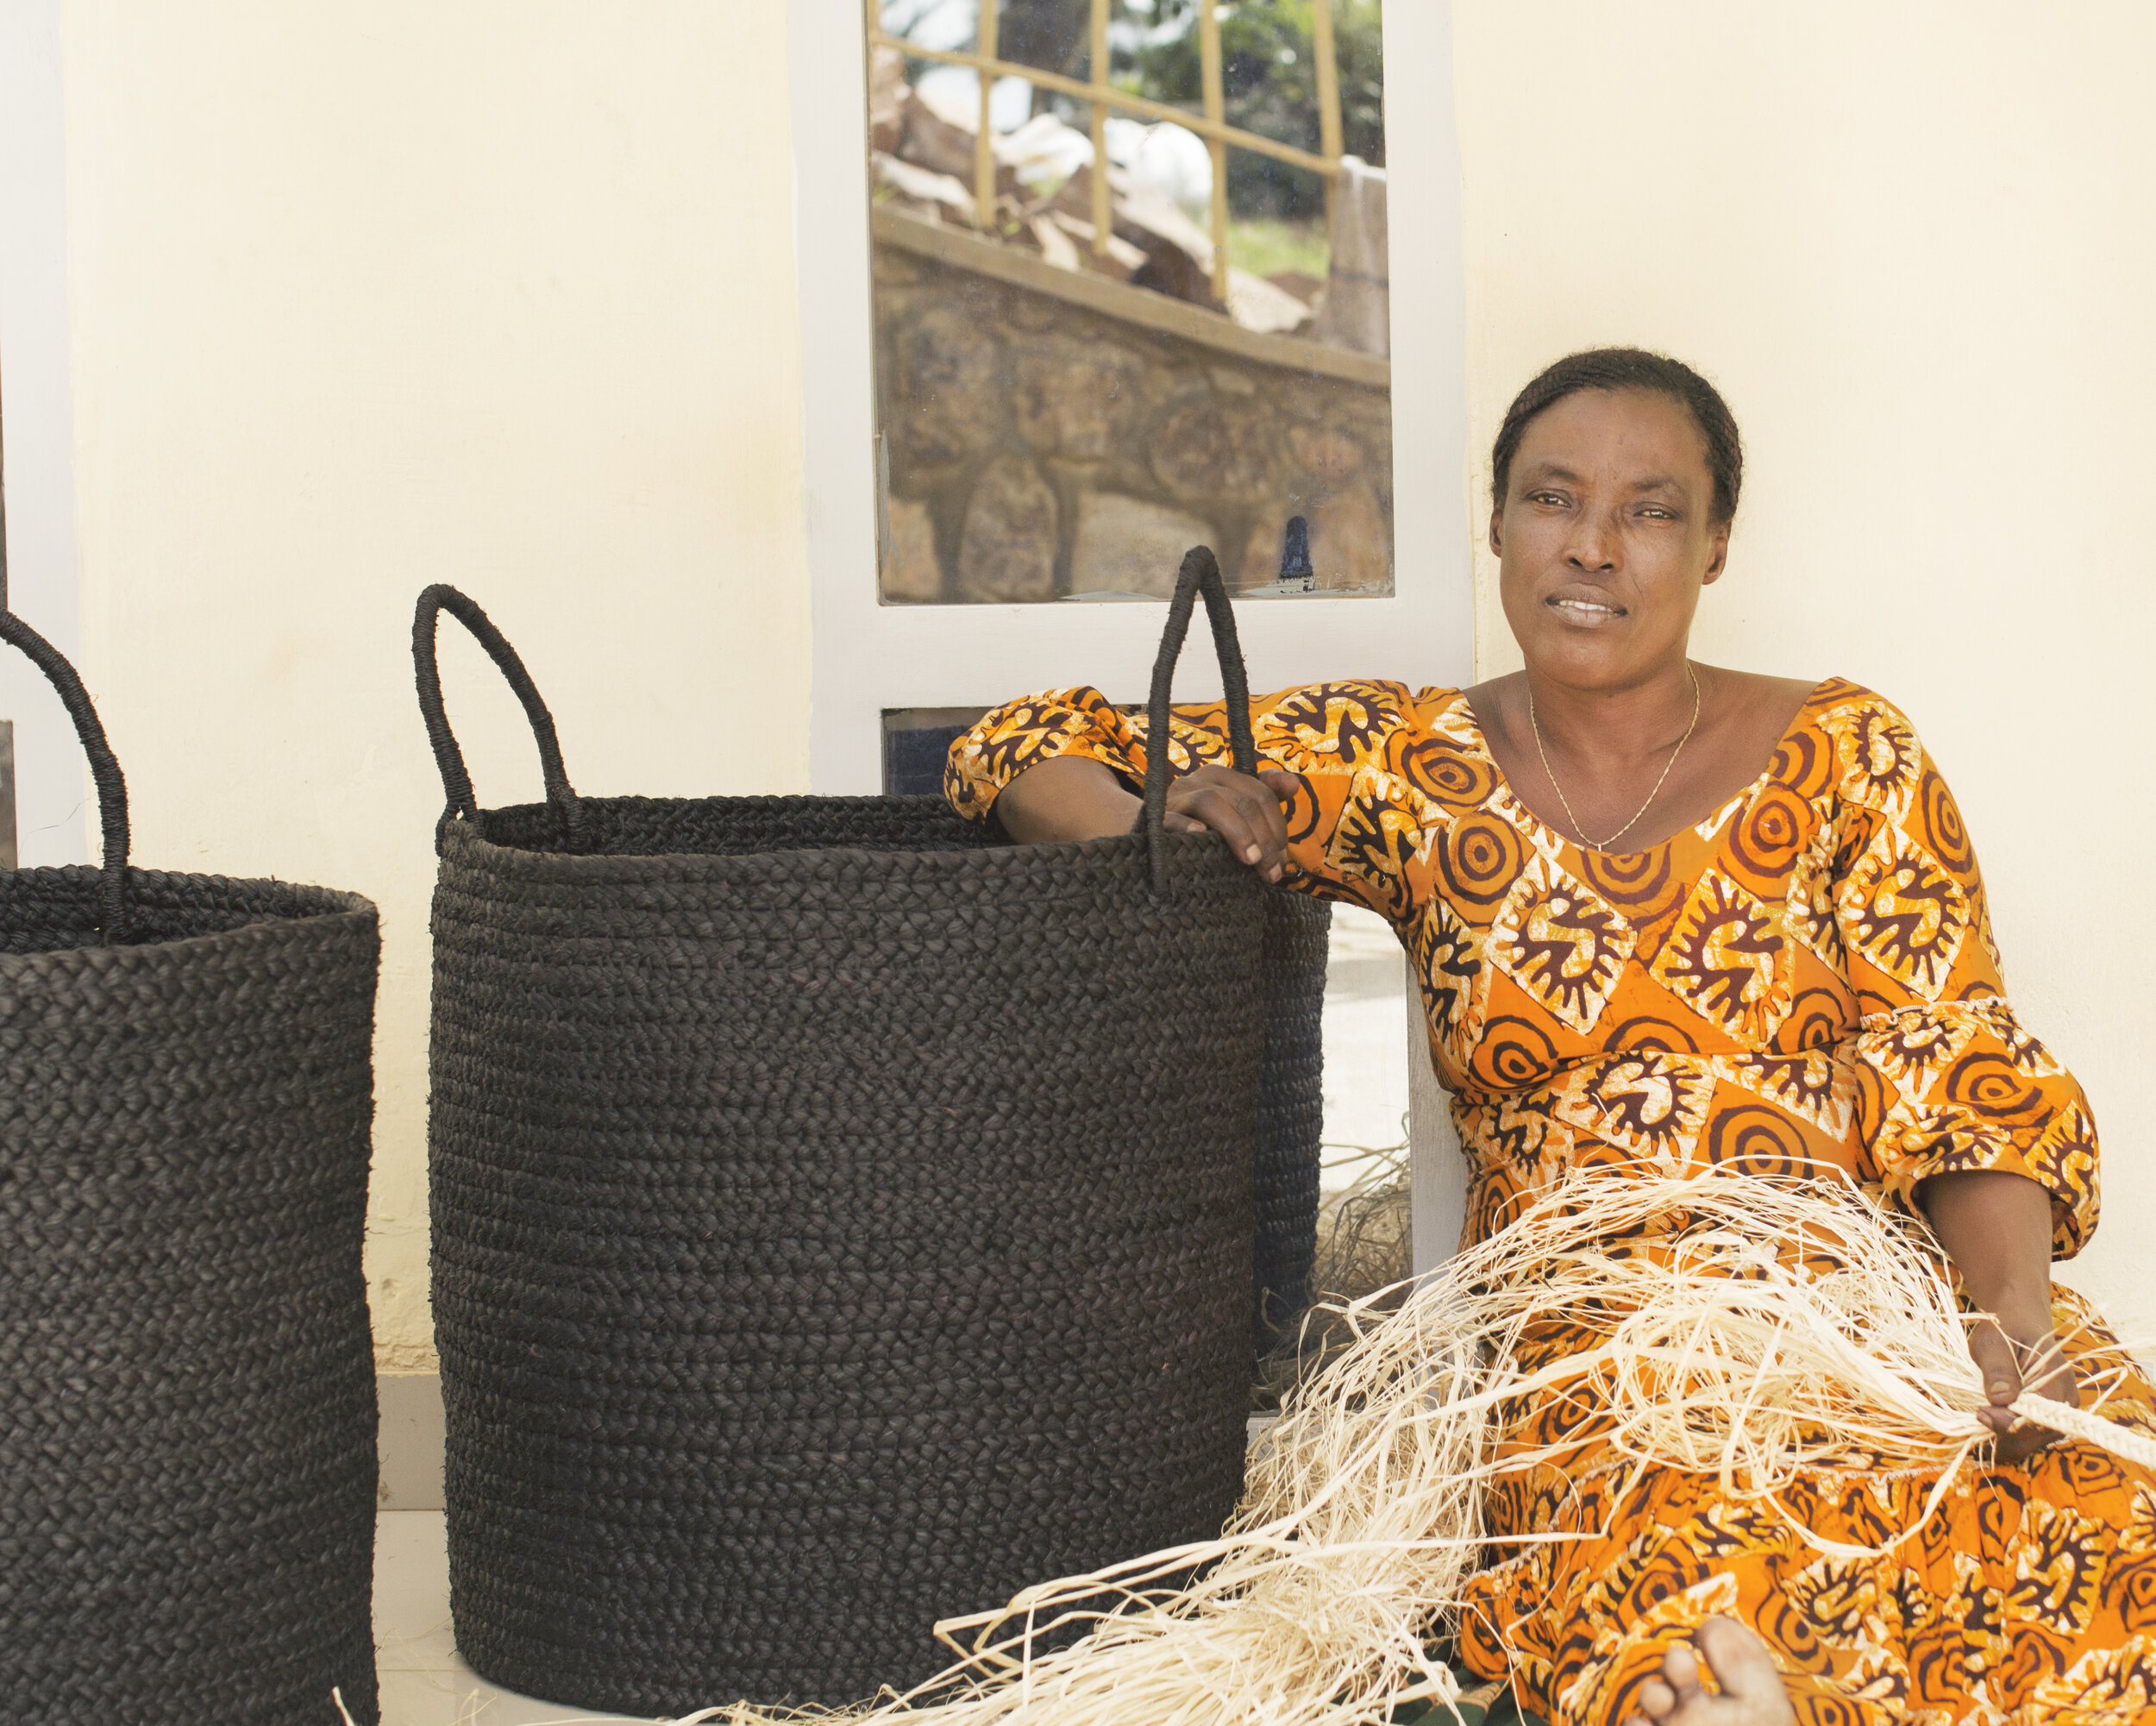 RB225 12 Inches Sweetgrass Basket Sand Tan Hand Woven African Basket Handmade in Rwanda Parakeet Green 